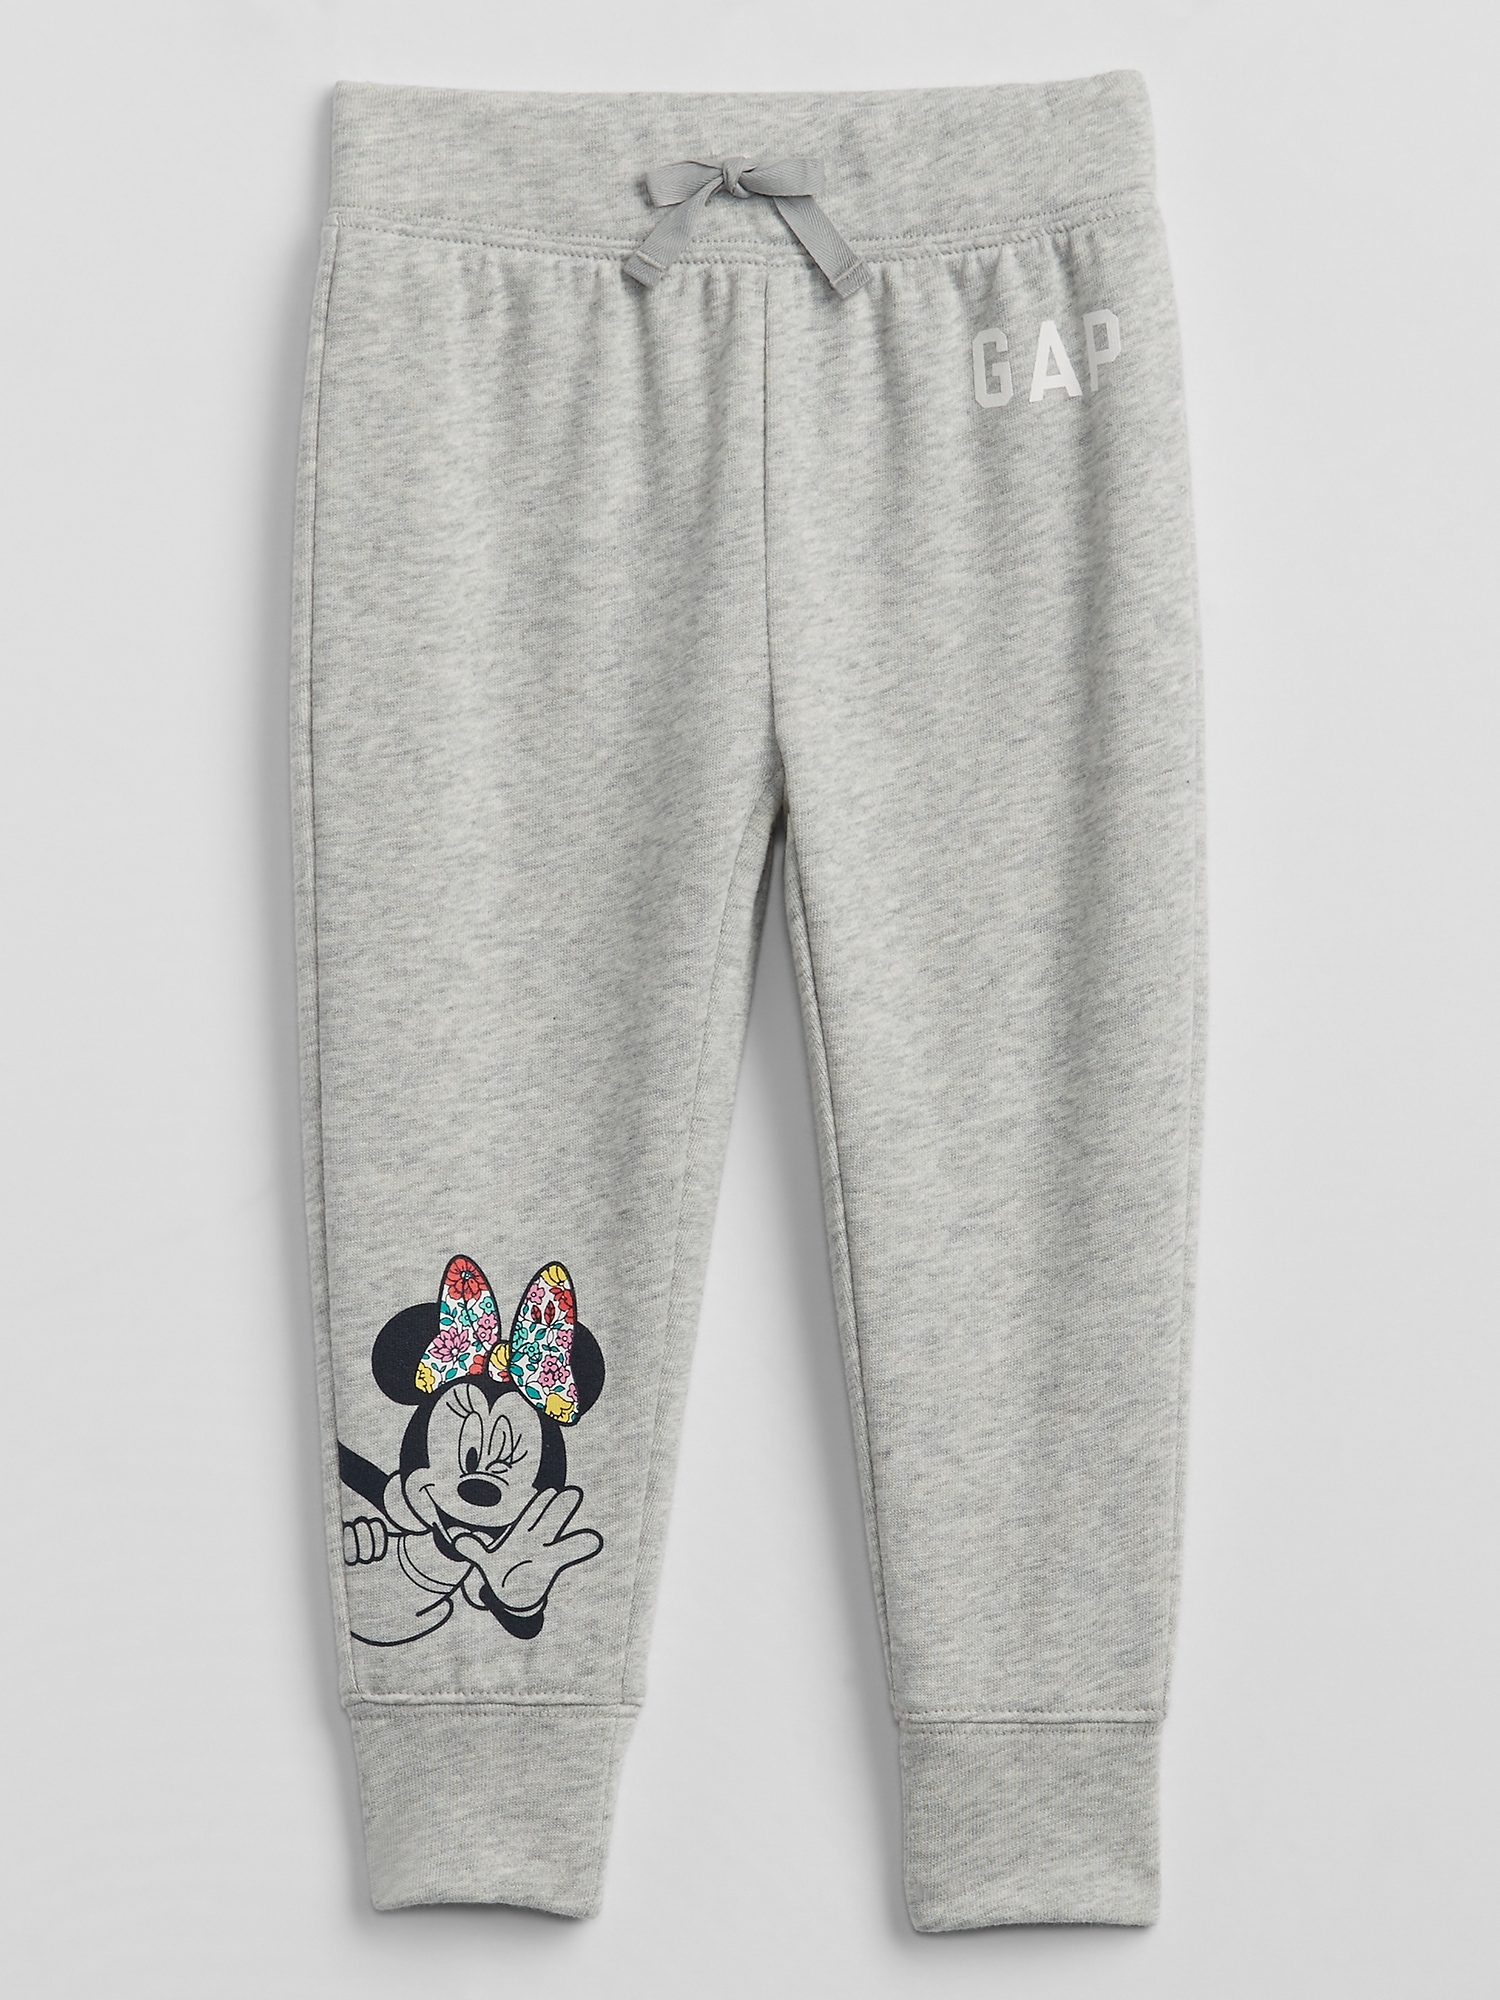 Disney Women Activewear Pants XS Gray Sweatpants Jogger Minnie Mouse 1928